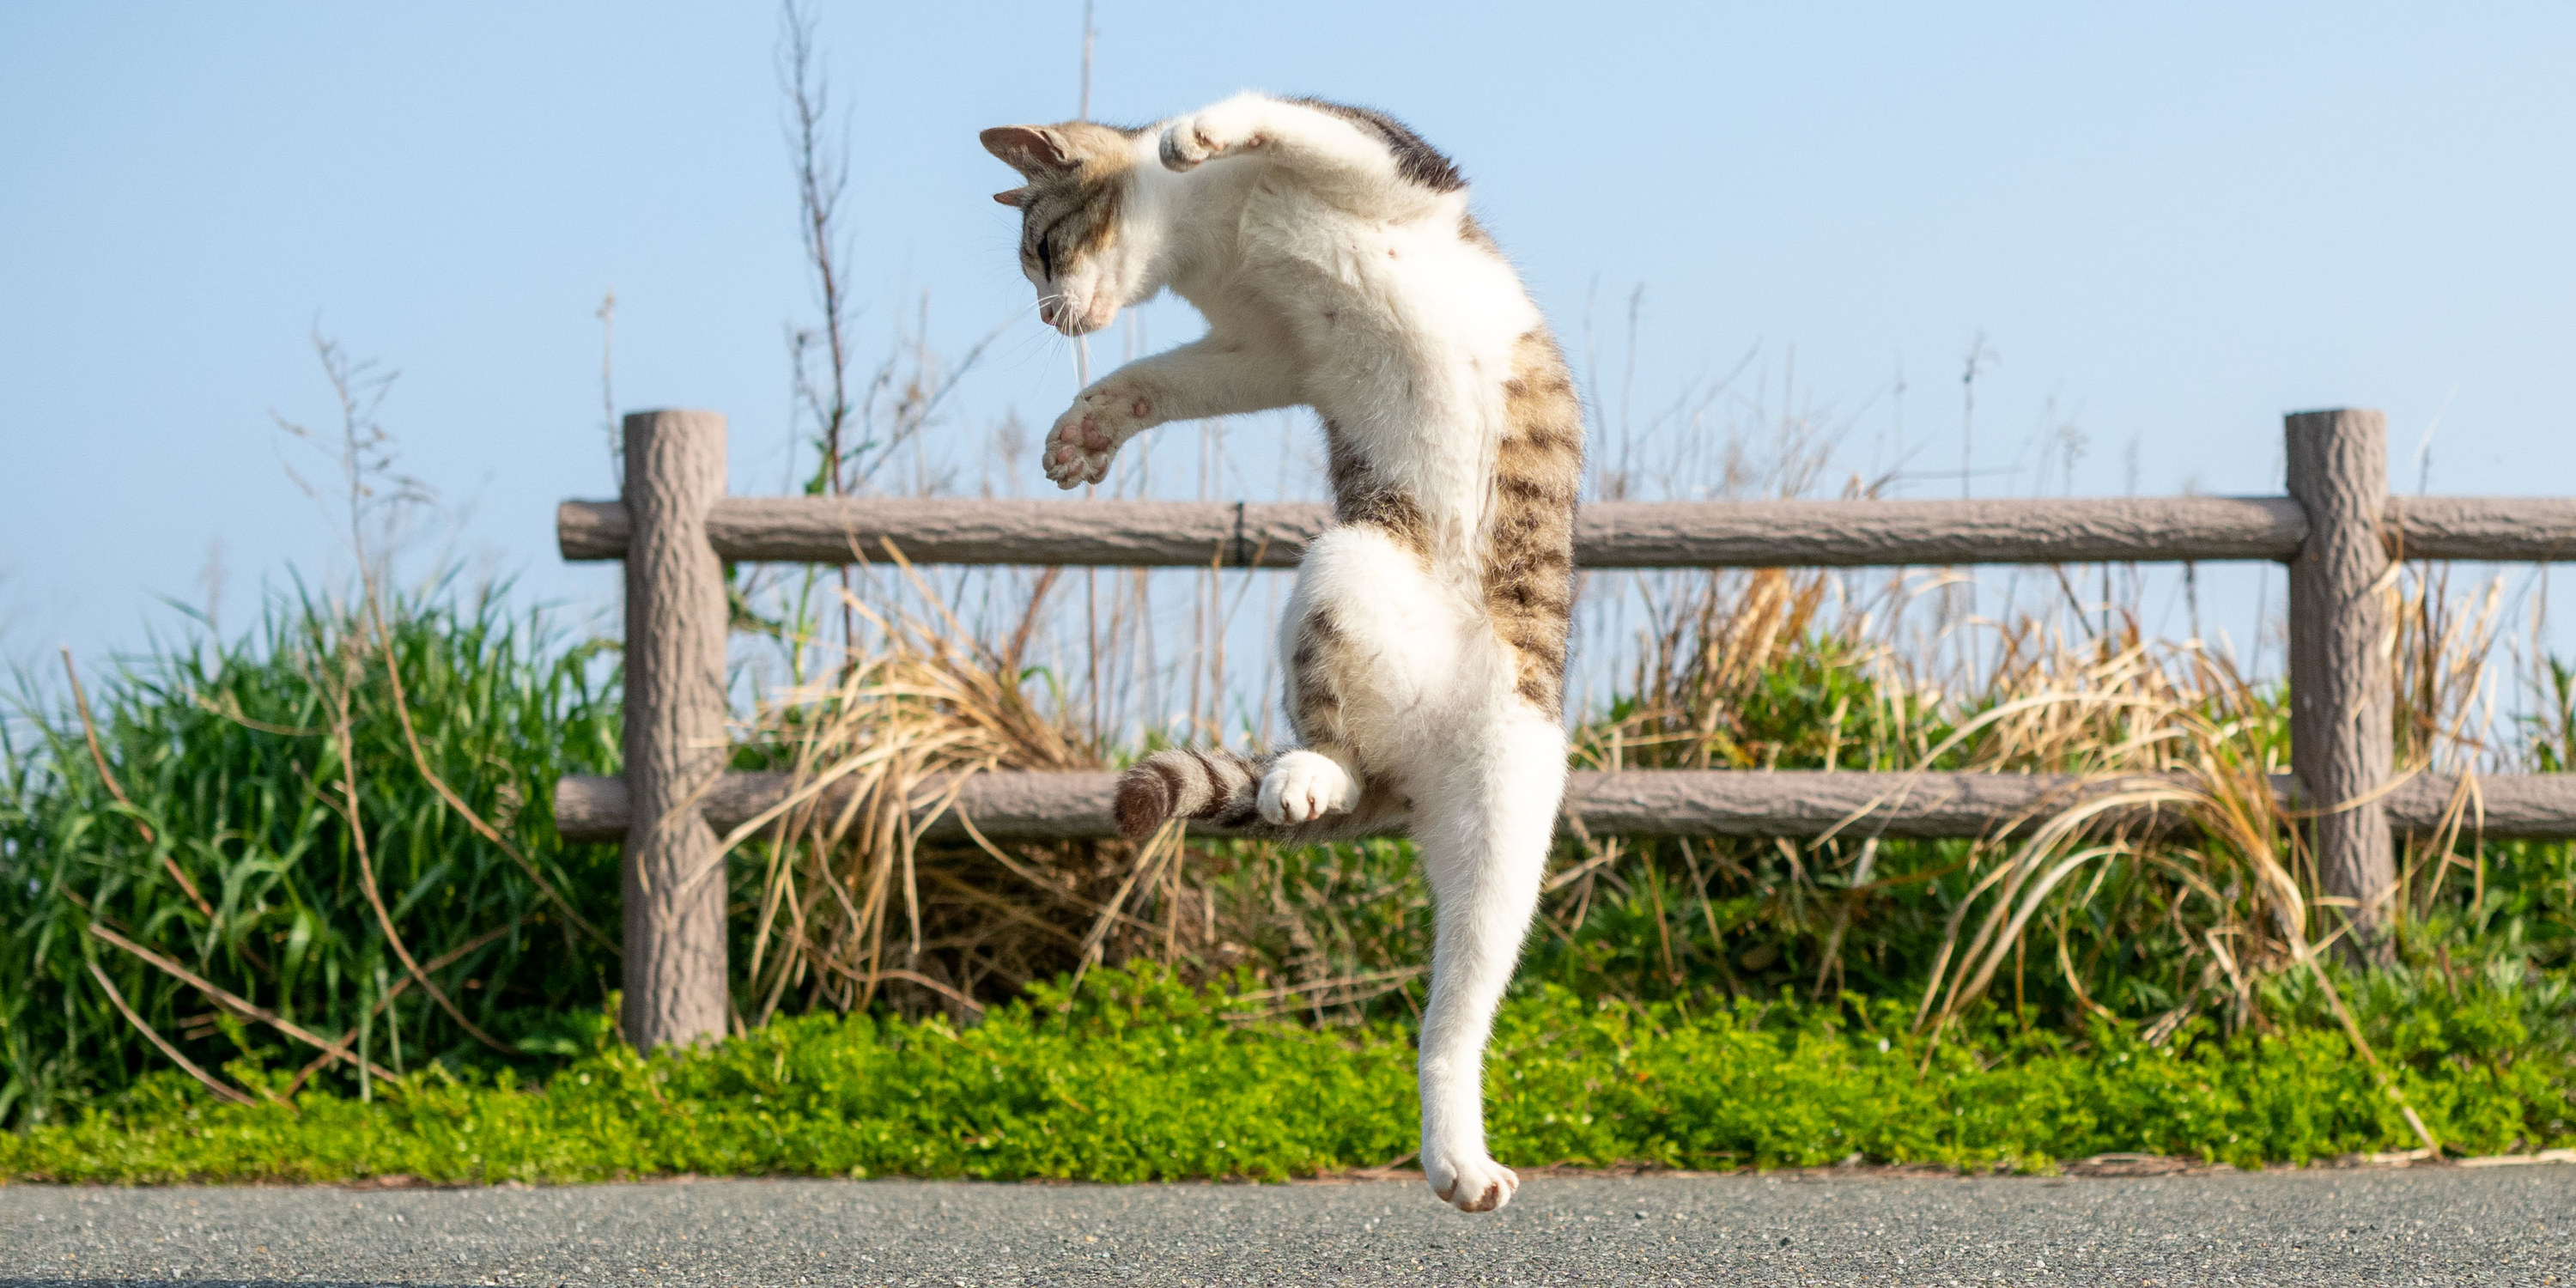 Karate Cat 構えが異常に強そうなネッコたち 海外の人たちも熱視線